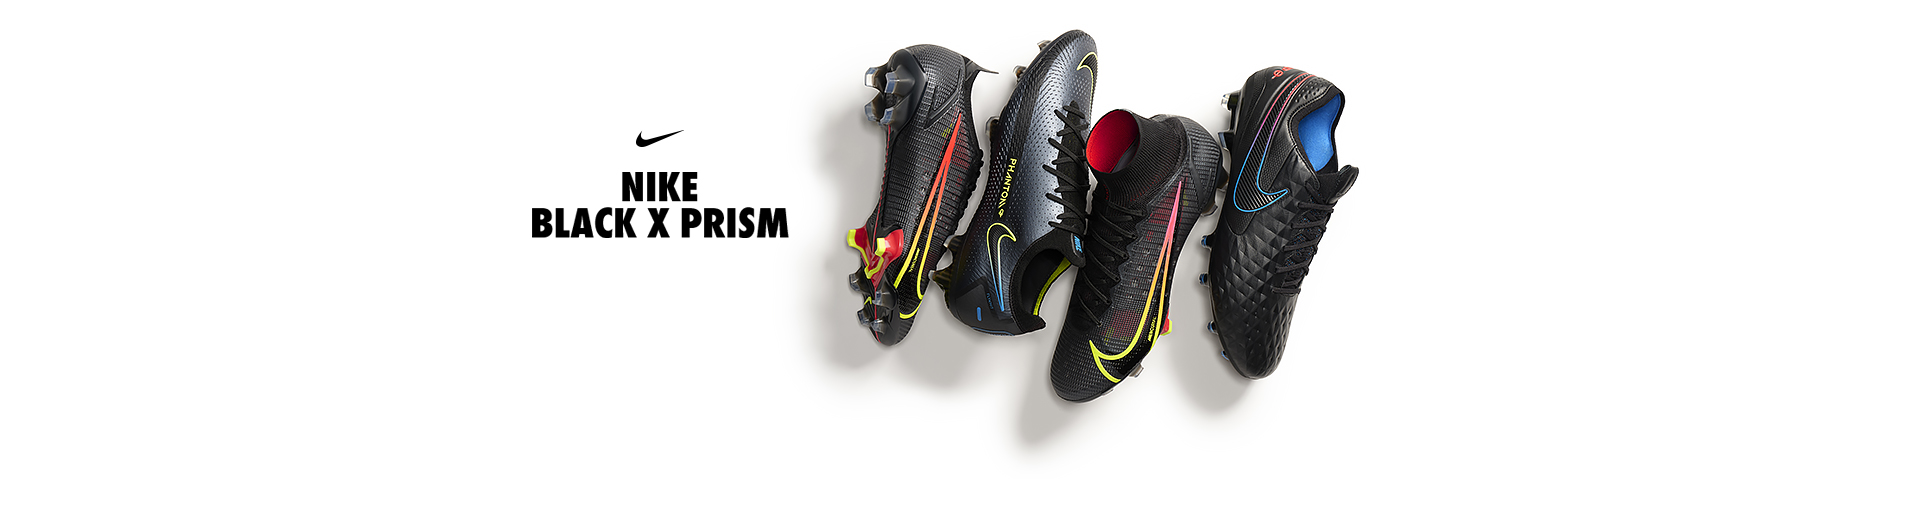 Новая коллекция Nike Black x Prism